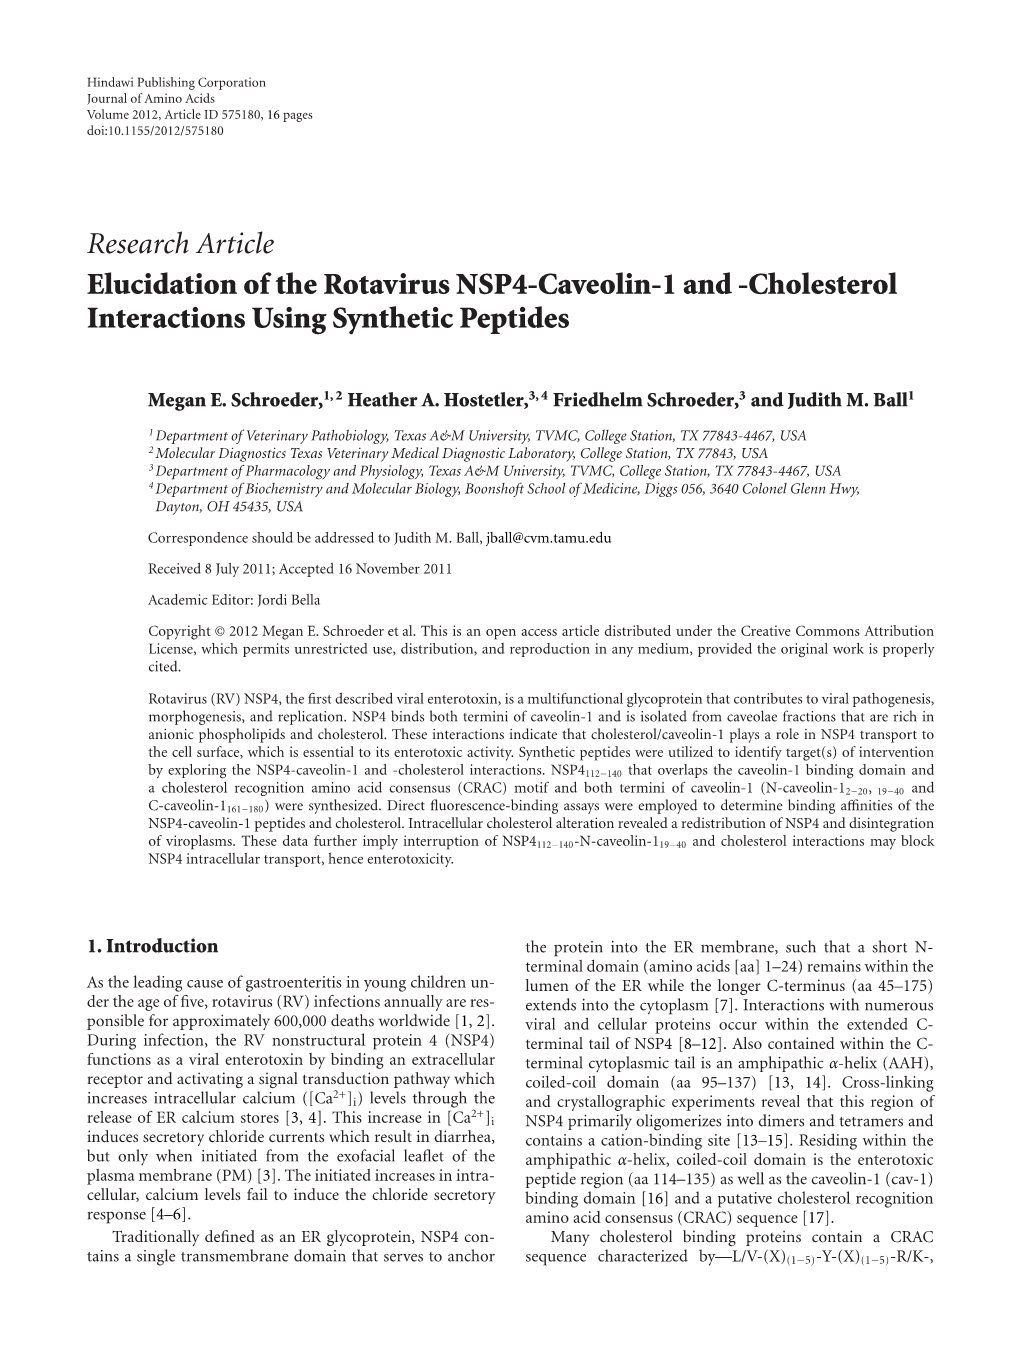 Elucidation of the Rotavirus NSP4-Caveolin-1 And-Cholesterol